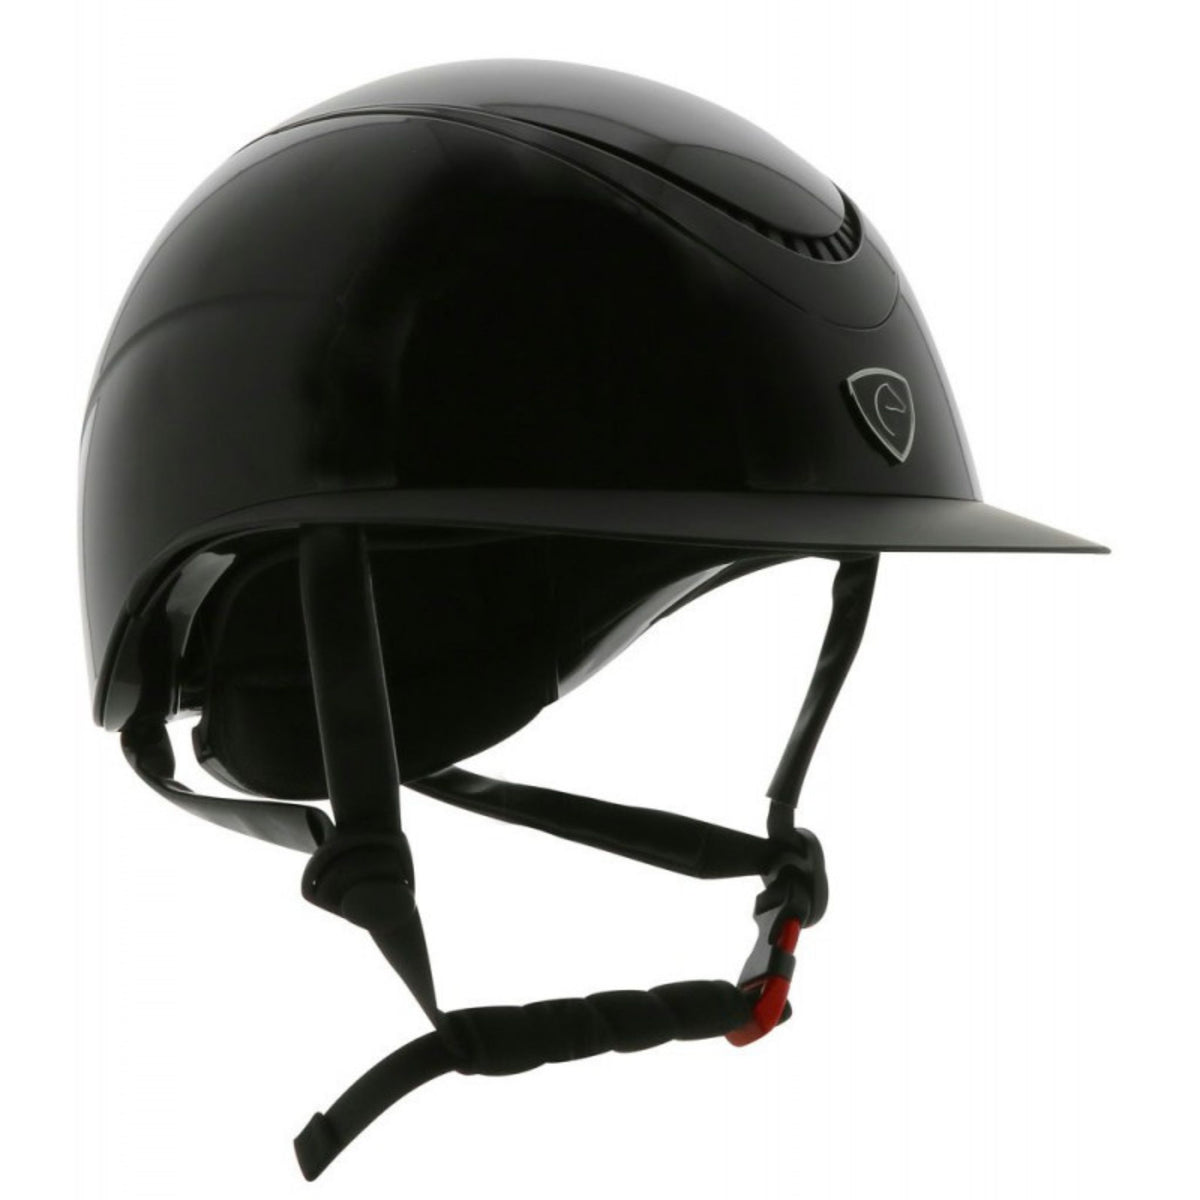 Right side of the shiny black helmet